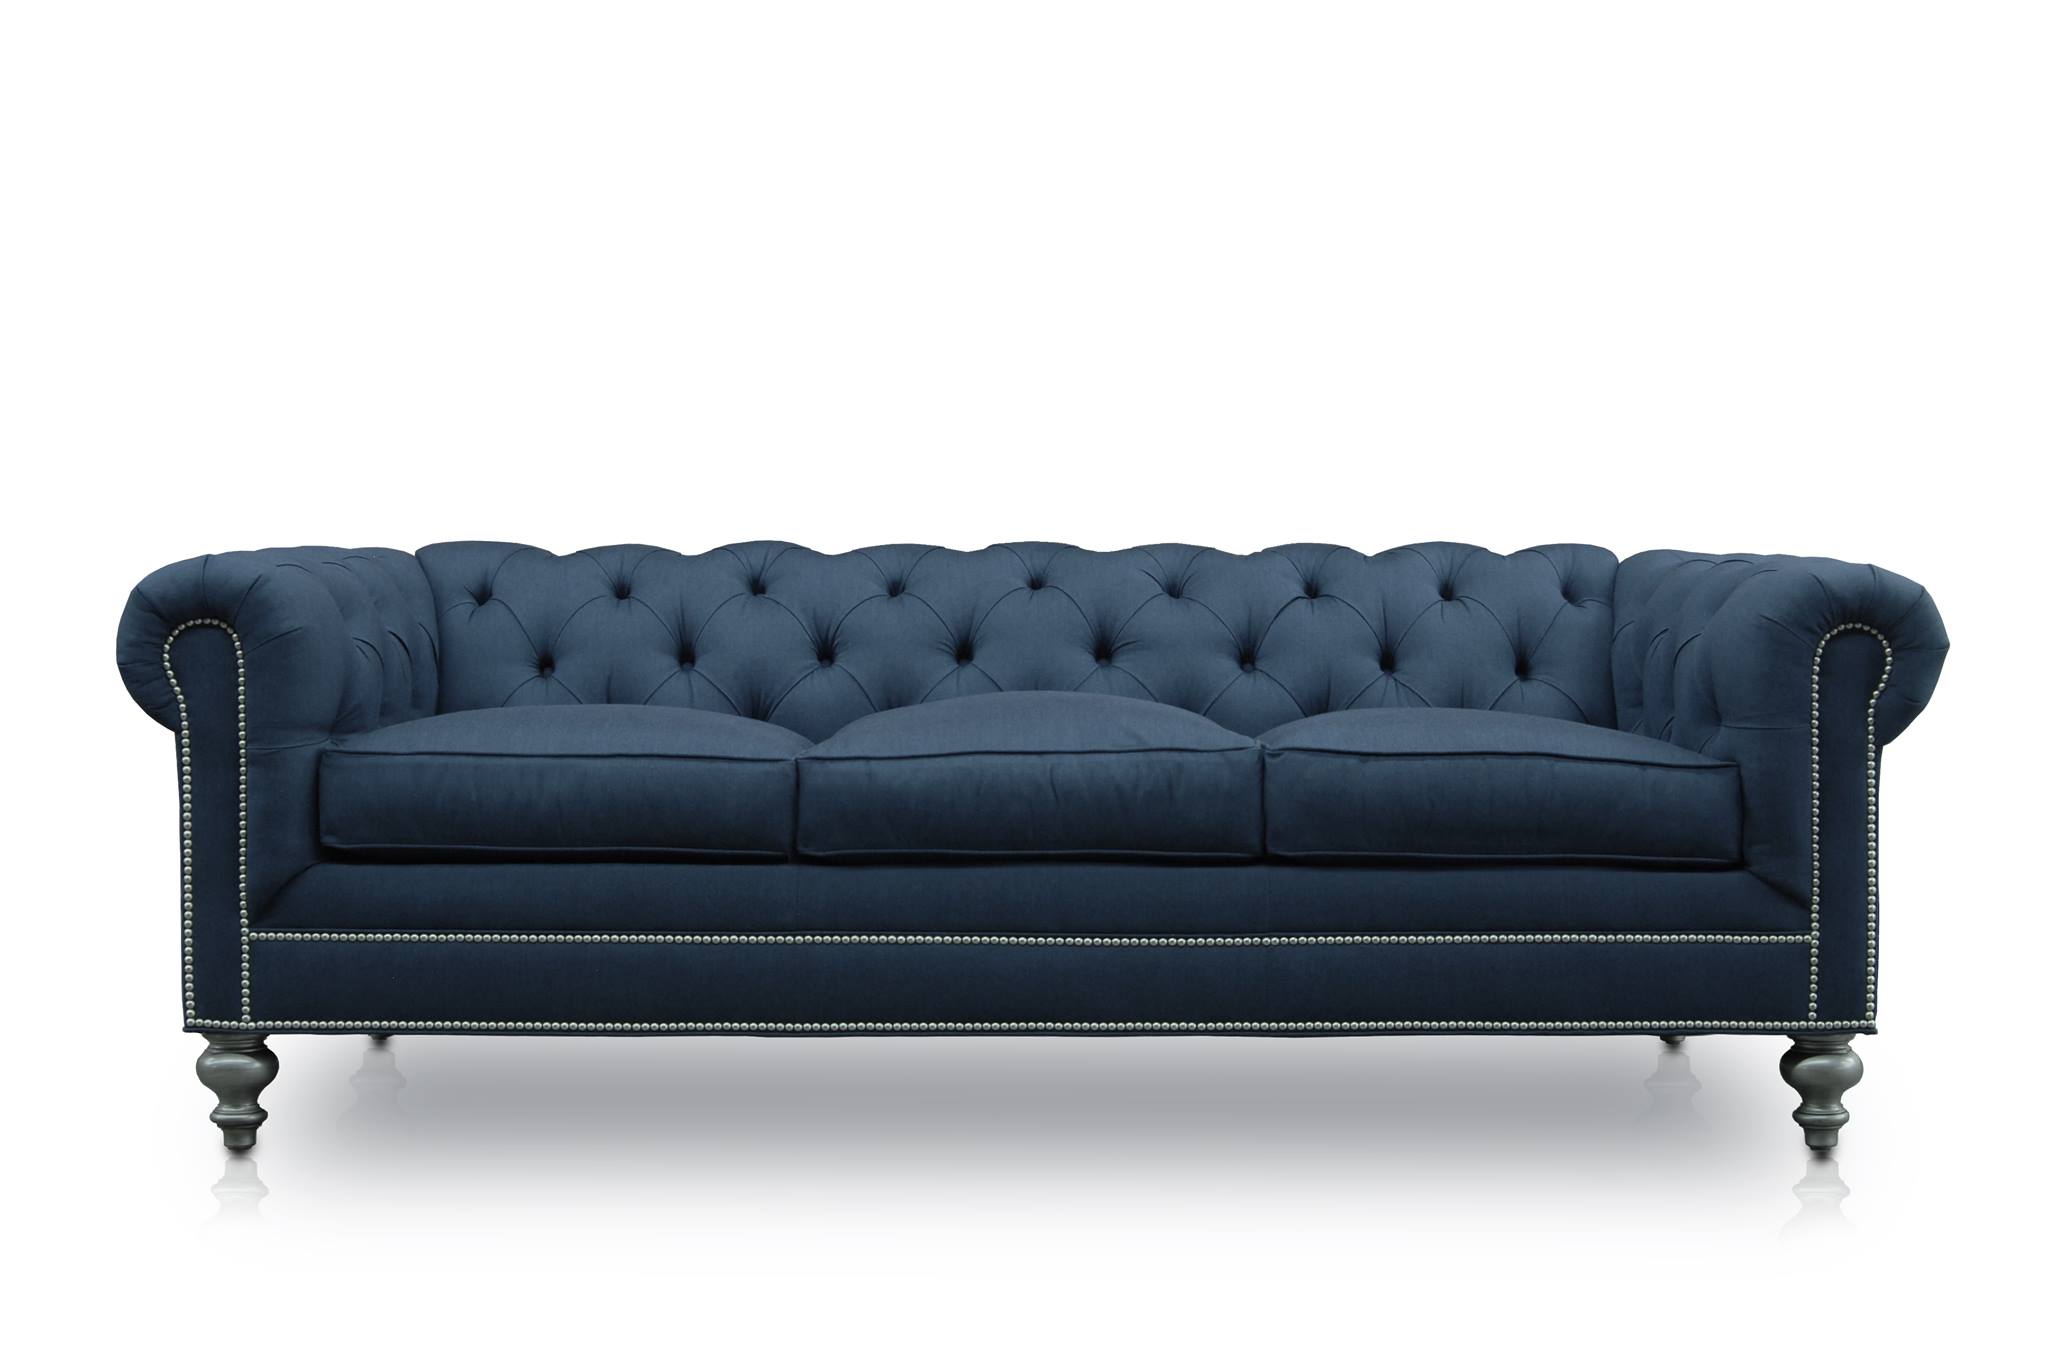 Fitzgerald Classic Chesterfield Sofa in Navy Blue Sunbrella Fabric